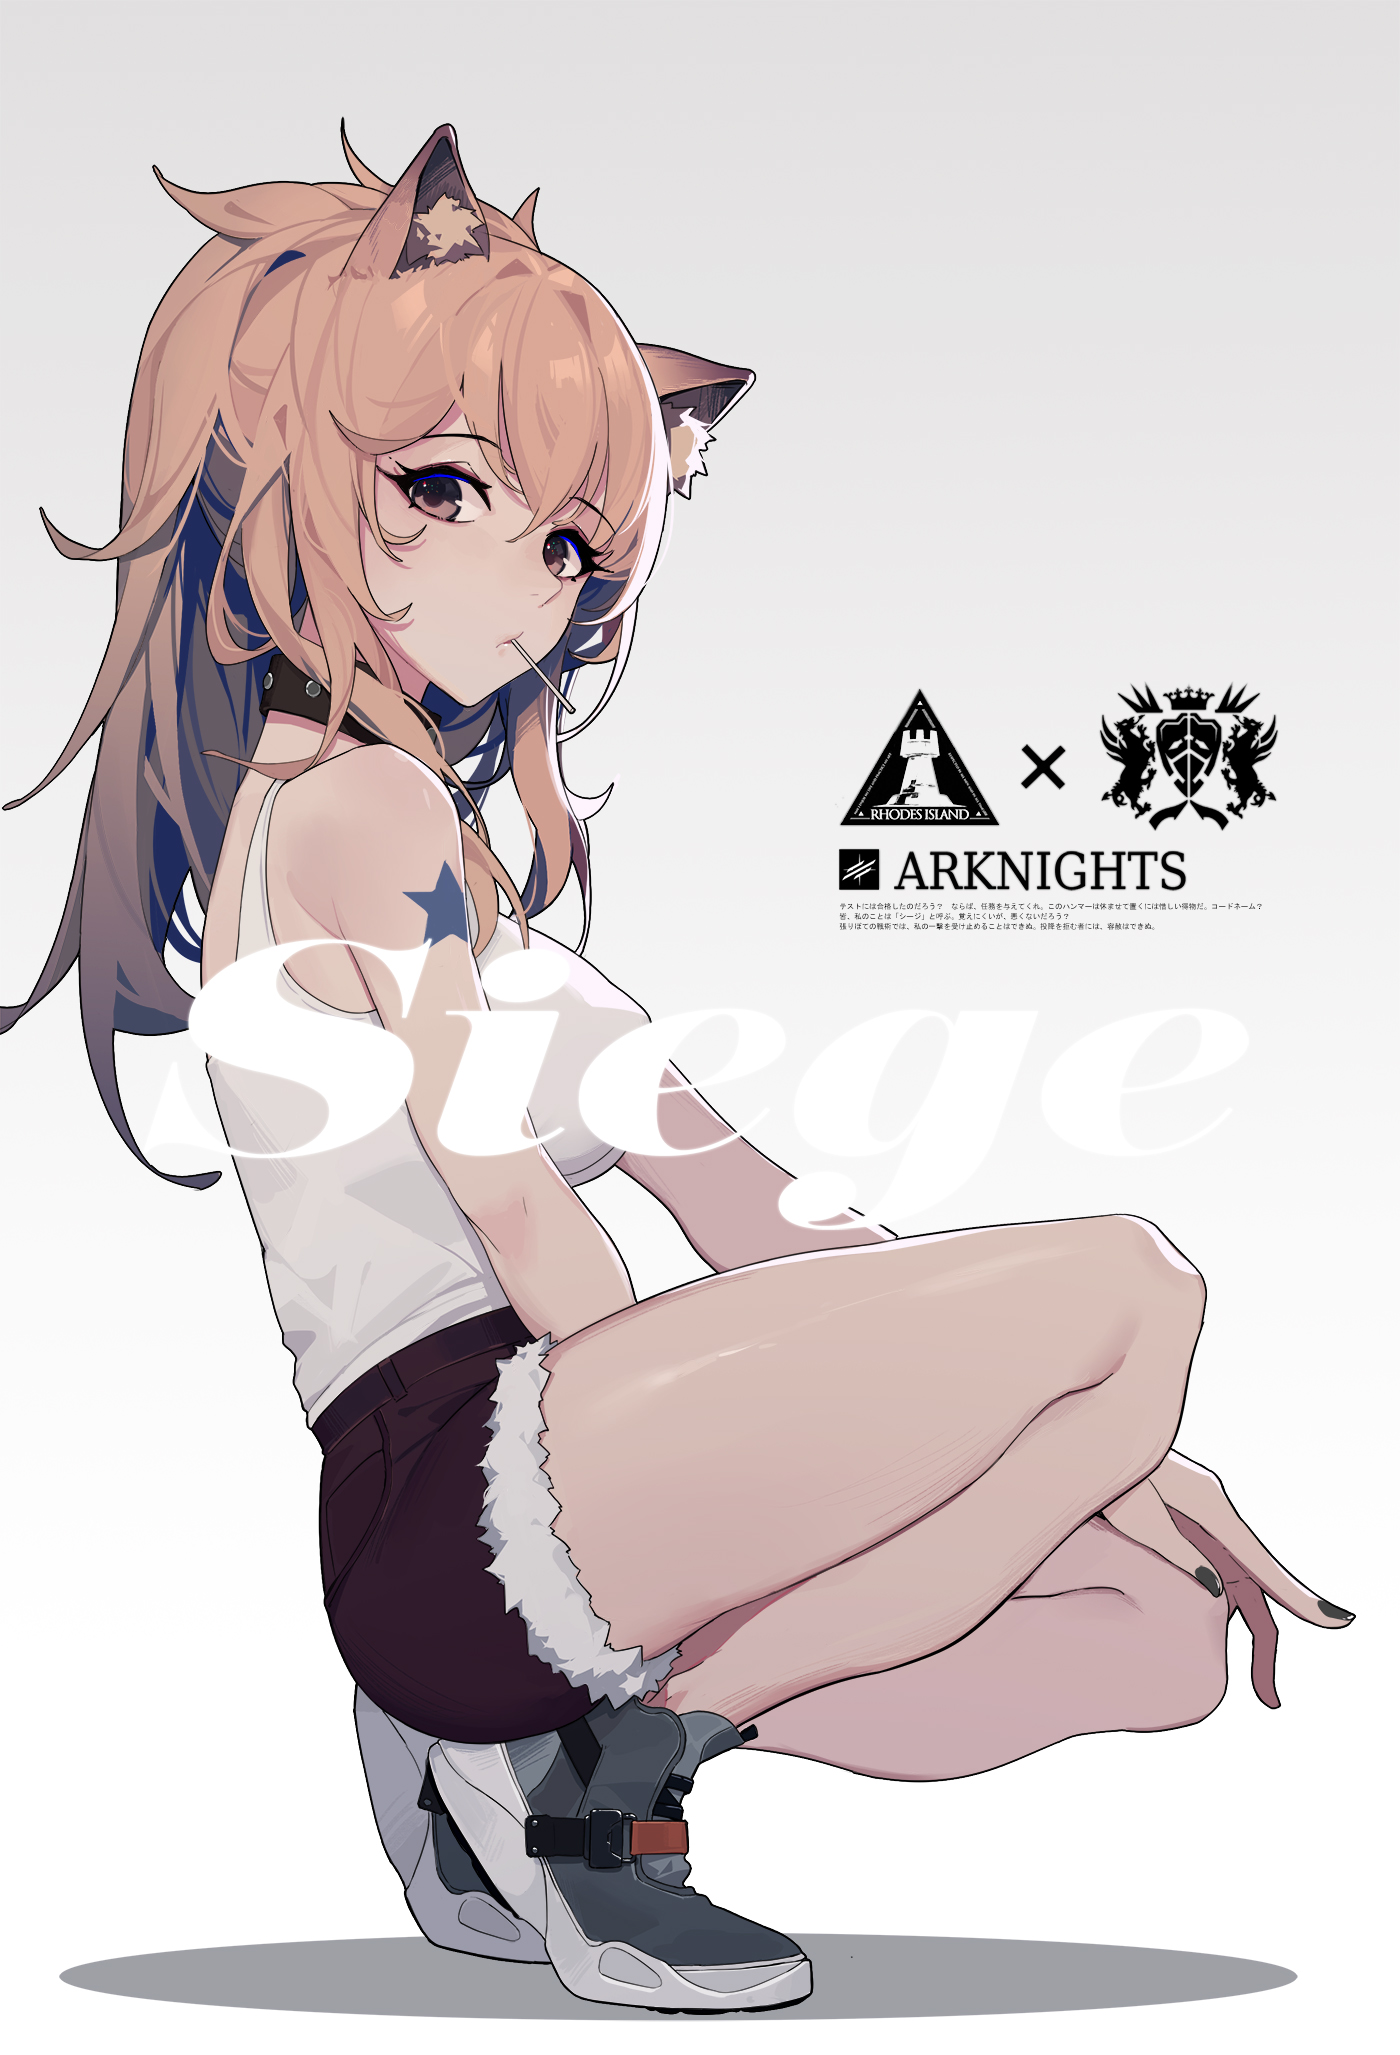 Anime 1400x2055 anime anime girls digital art artwork 2D portrait display Arknights Siege(Arknights) MonGarit animal ears blonde tank top squatting